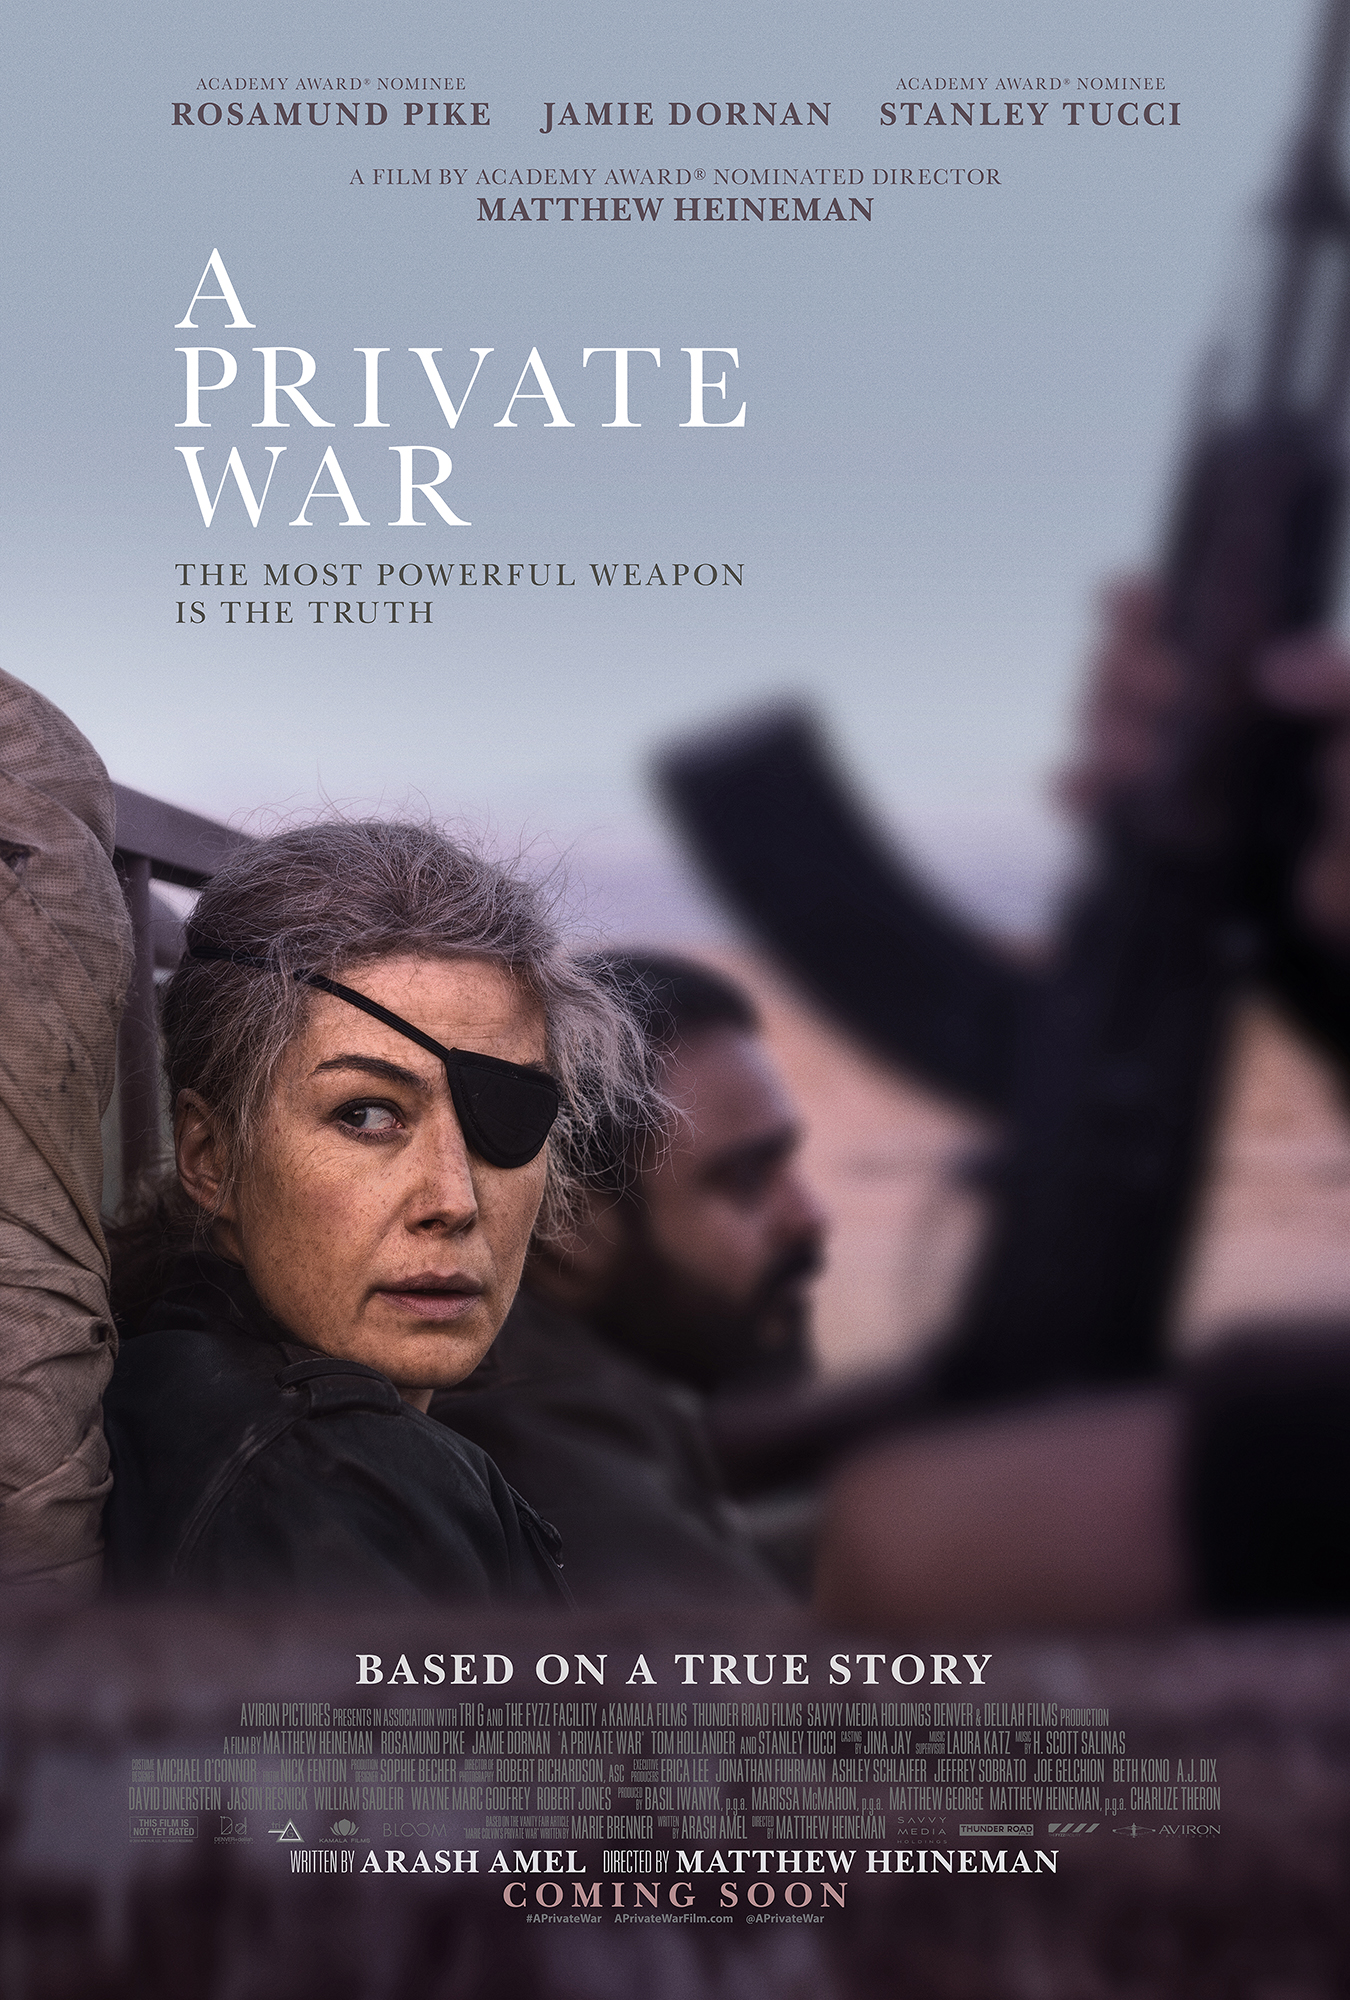 Nonton film A Private War layarkaca21 indoxx1 ganool online streaming terbaru